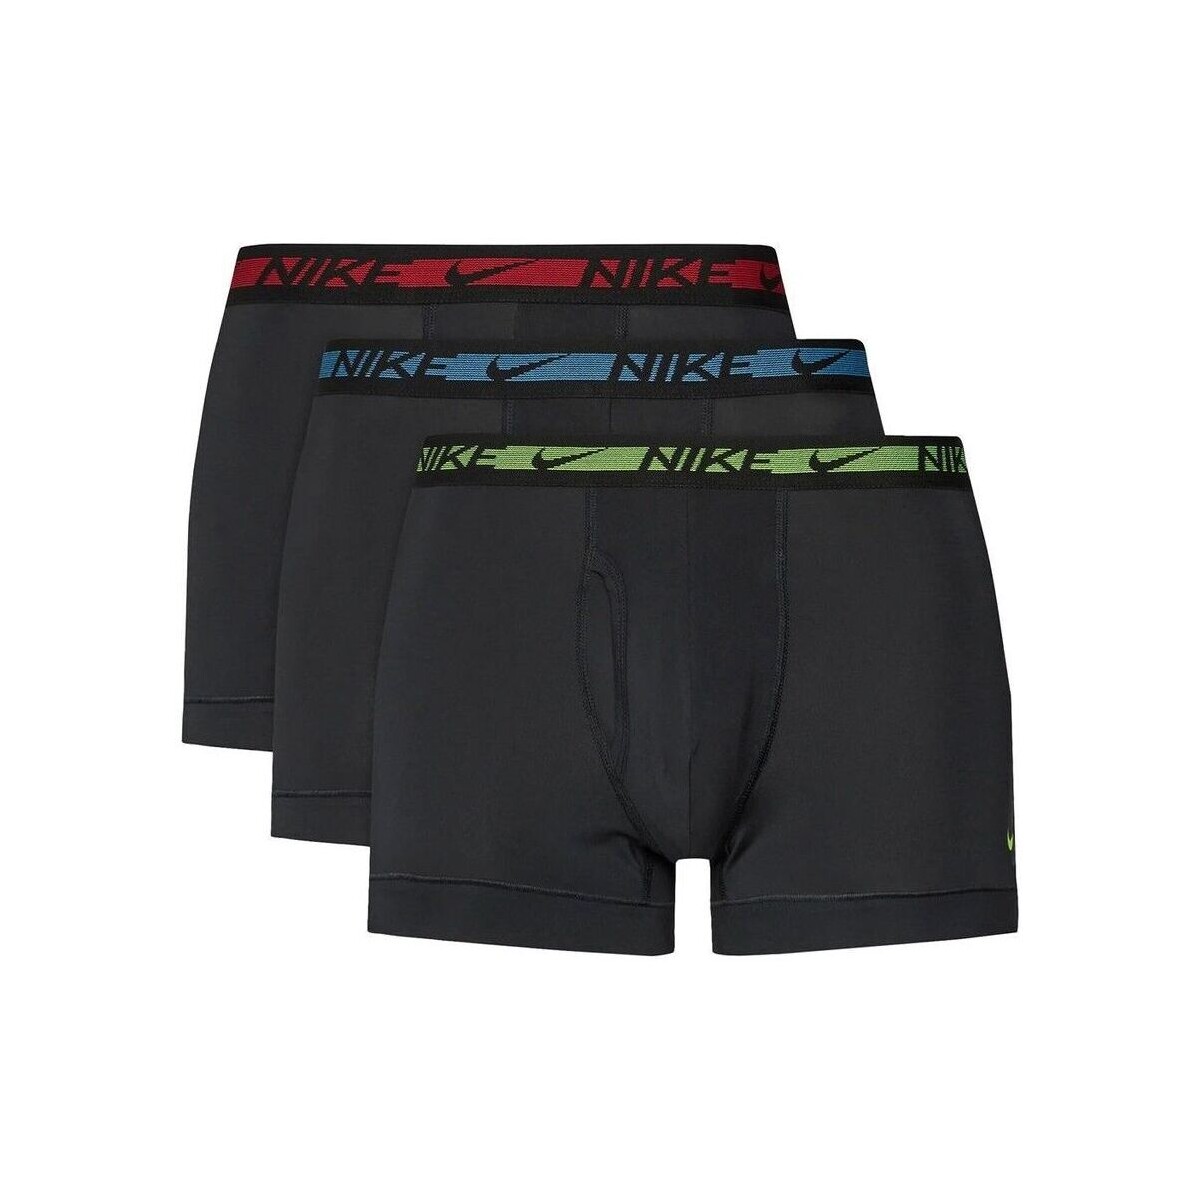 Boxer Nike - 0000ke1152-